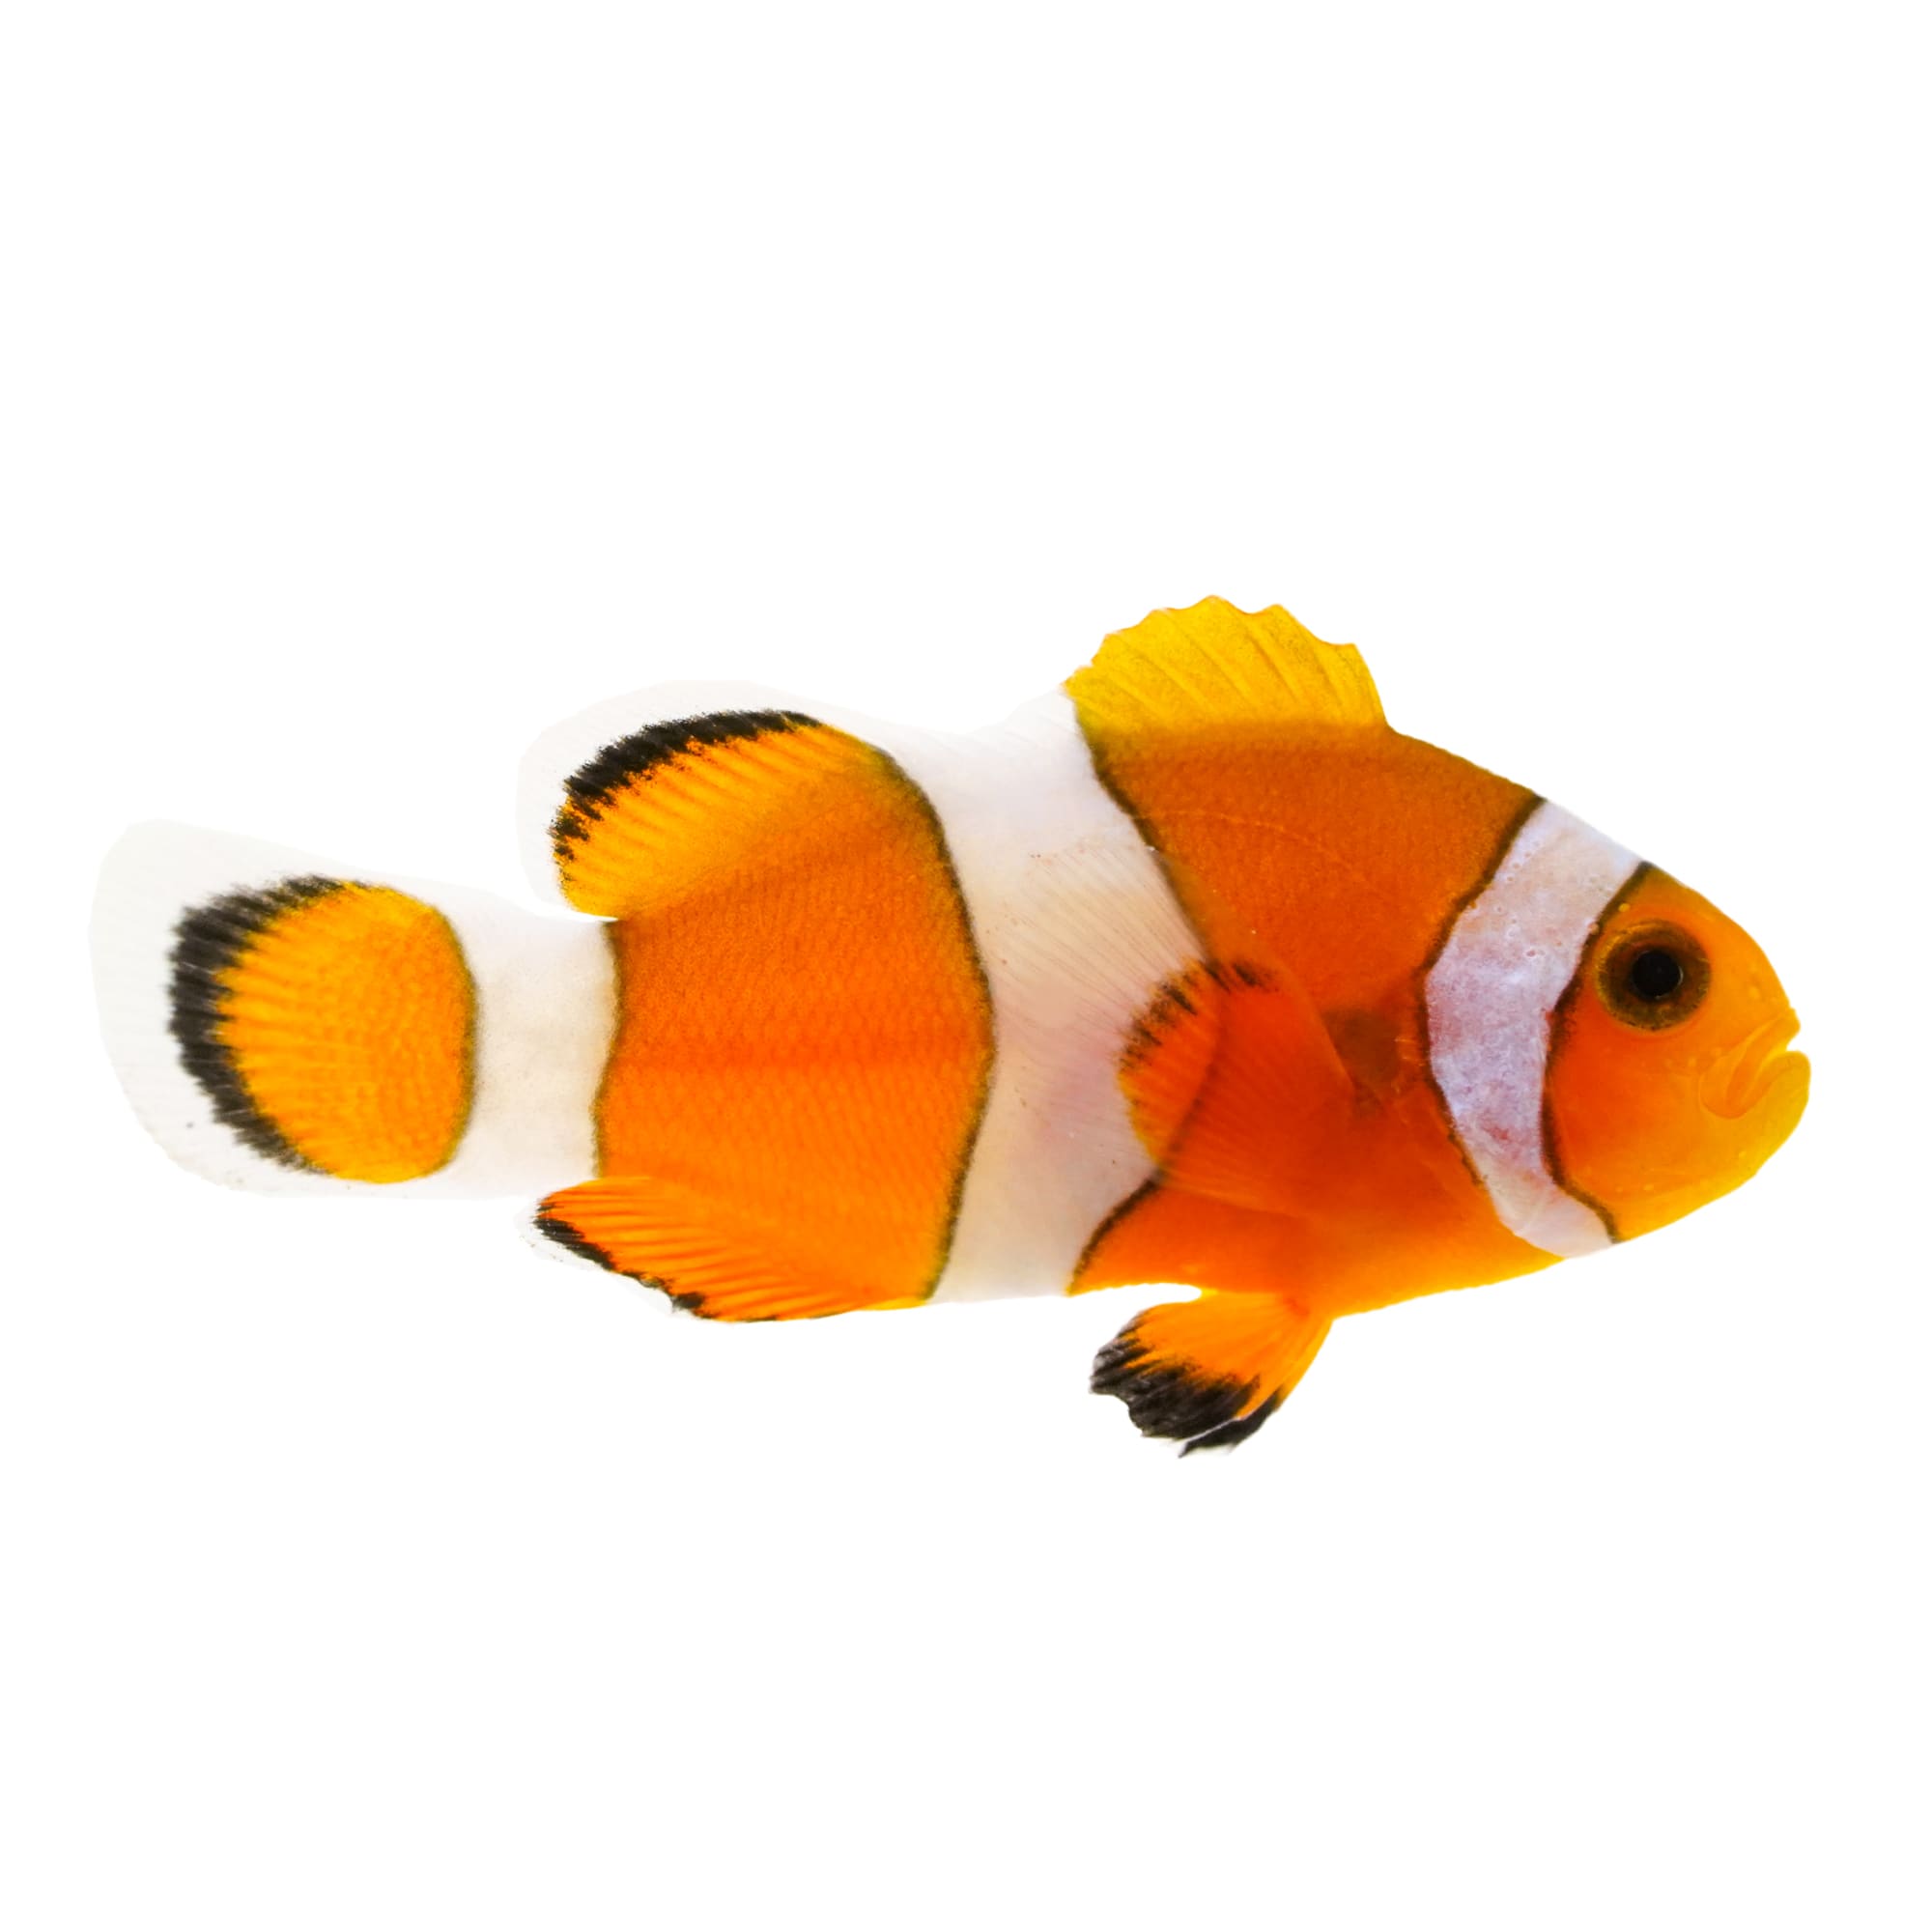 Ocellaris Clownfish For Sale